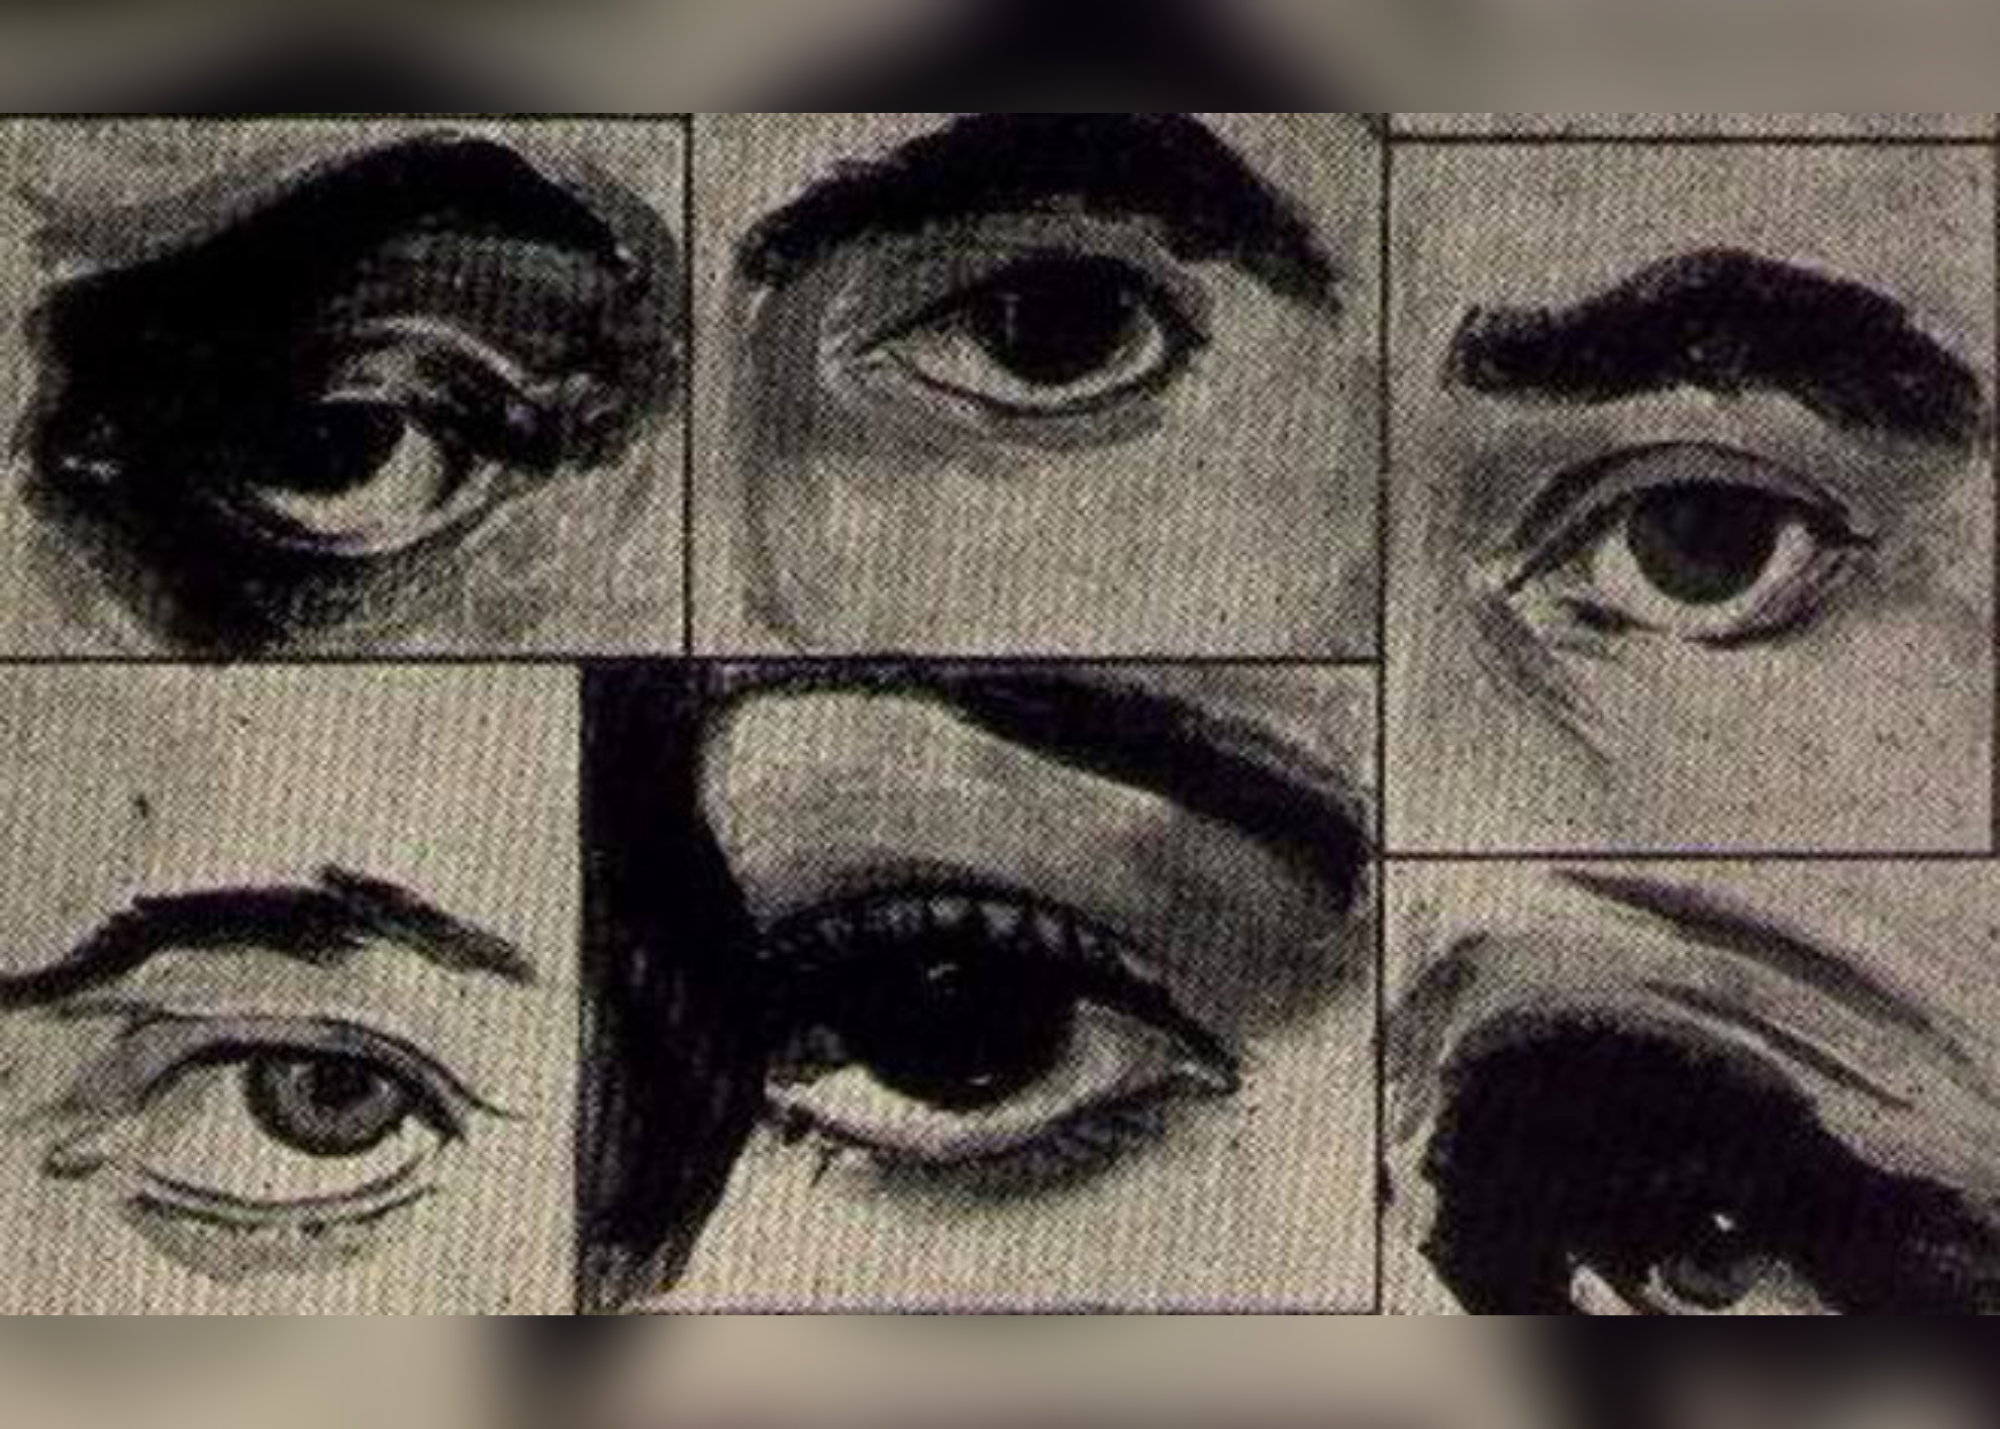 Six sketches of sanpaku eyes